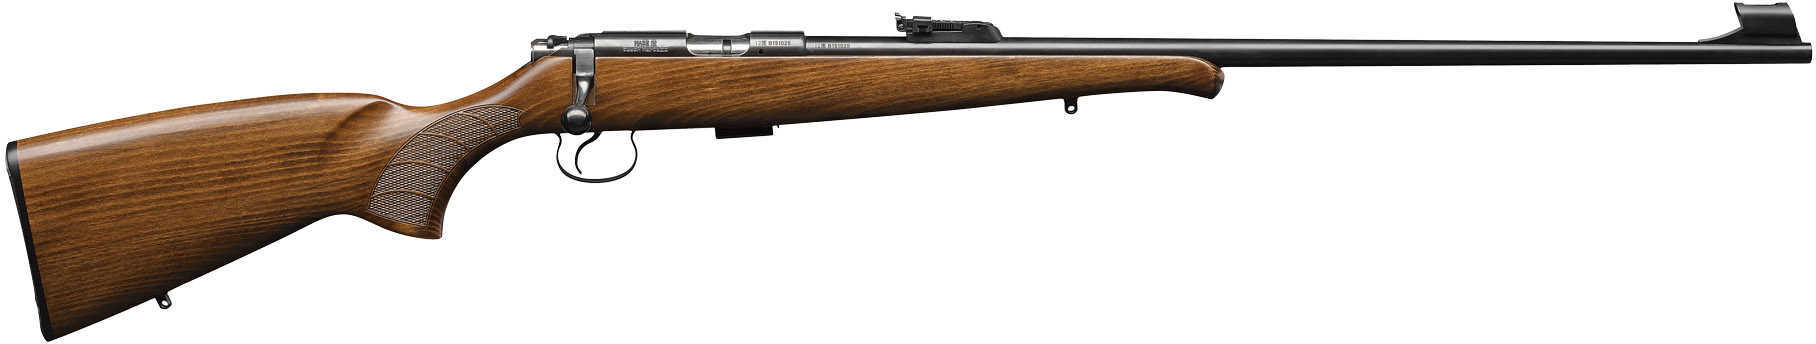 CZ USA 455 Training Rifle 17 HMR Beechwood Stock 5 Round 02103